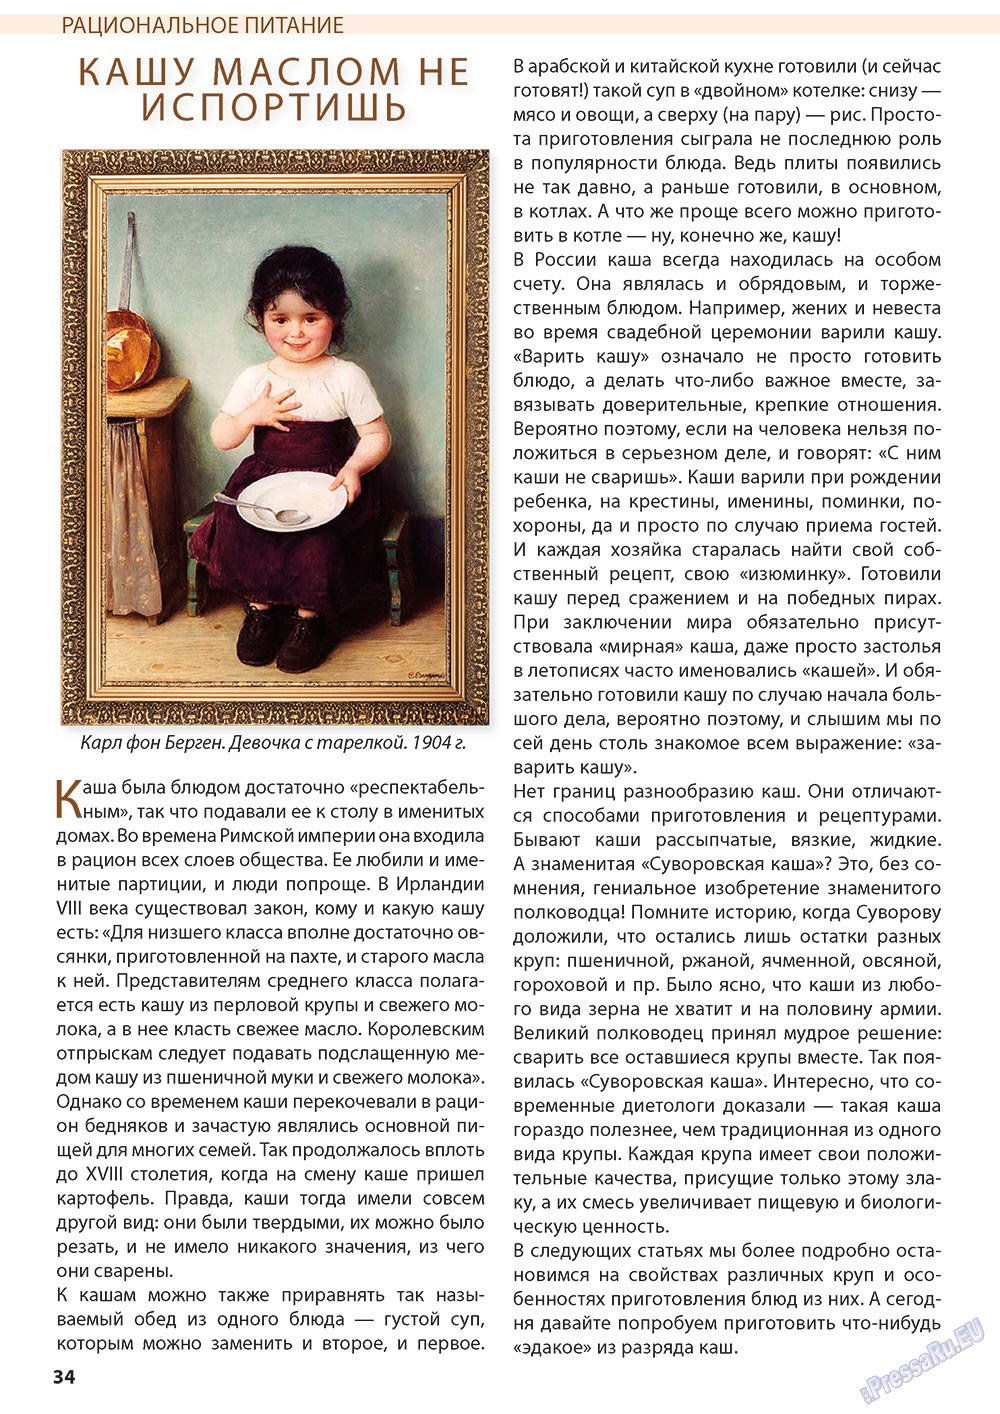 Wadim, журнал. 2013 №3 стр.34